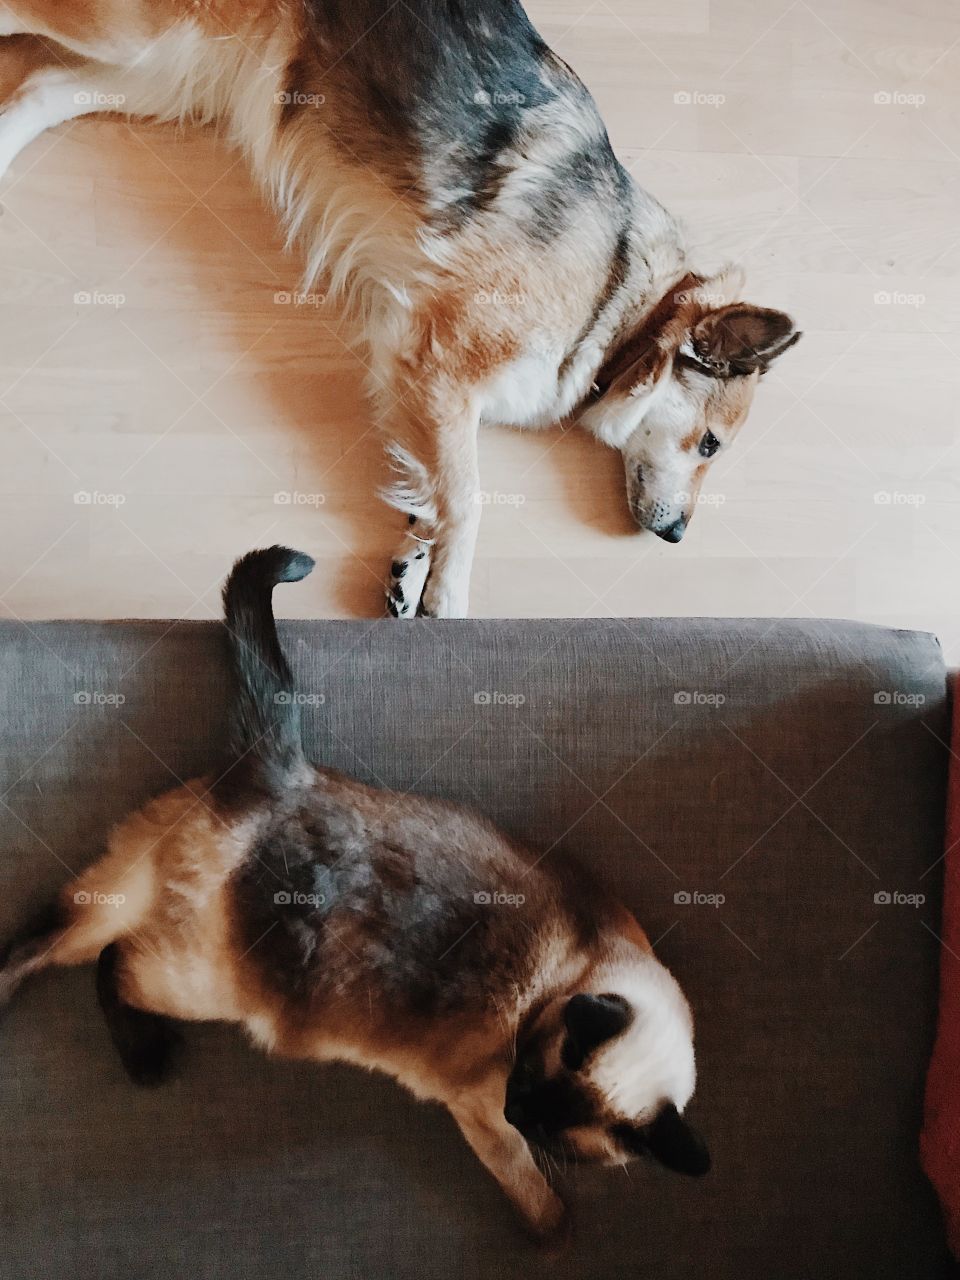 Cat and dog synchronized 